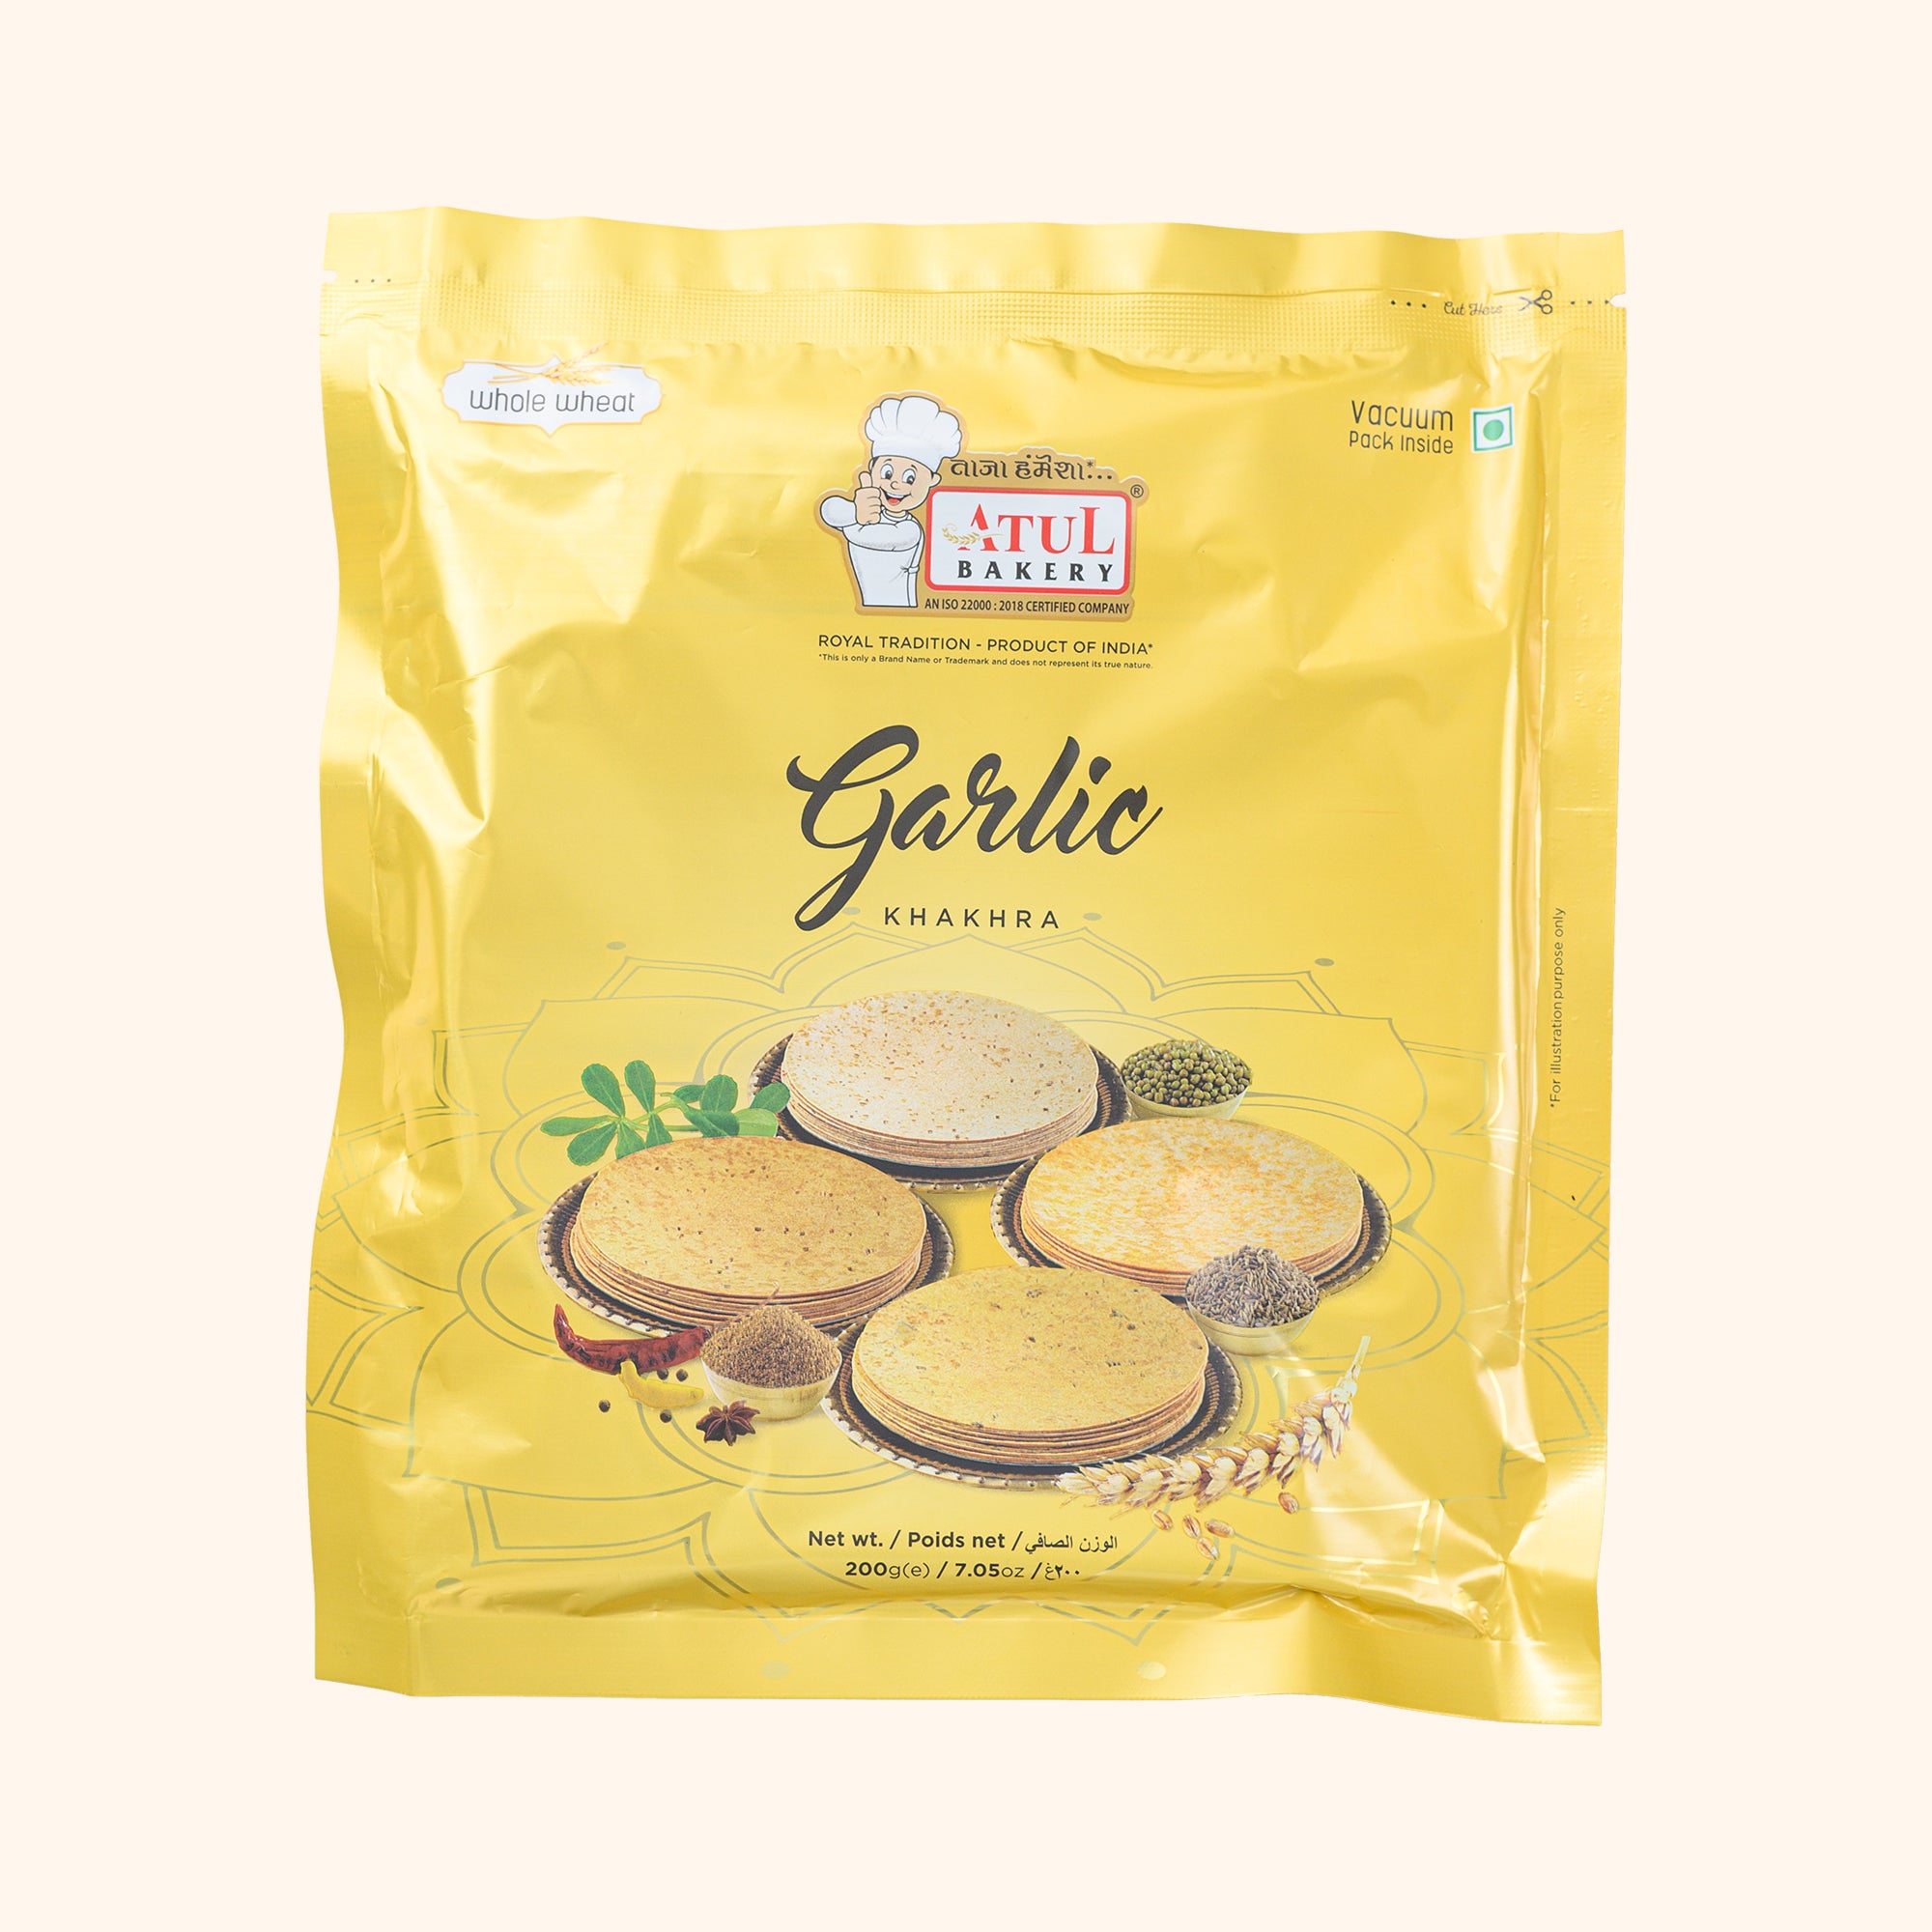 Atul Bakery Garlic Khakhra || Ready to Eat Snacks || PRODUCT OF INDIA || Whole Wheat